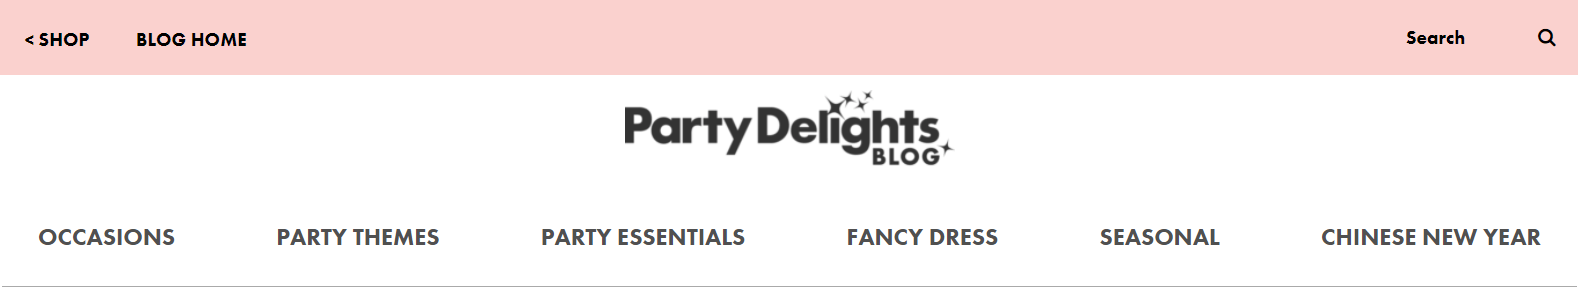 Party Delights Blogging